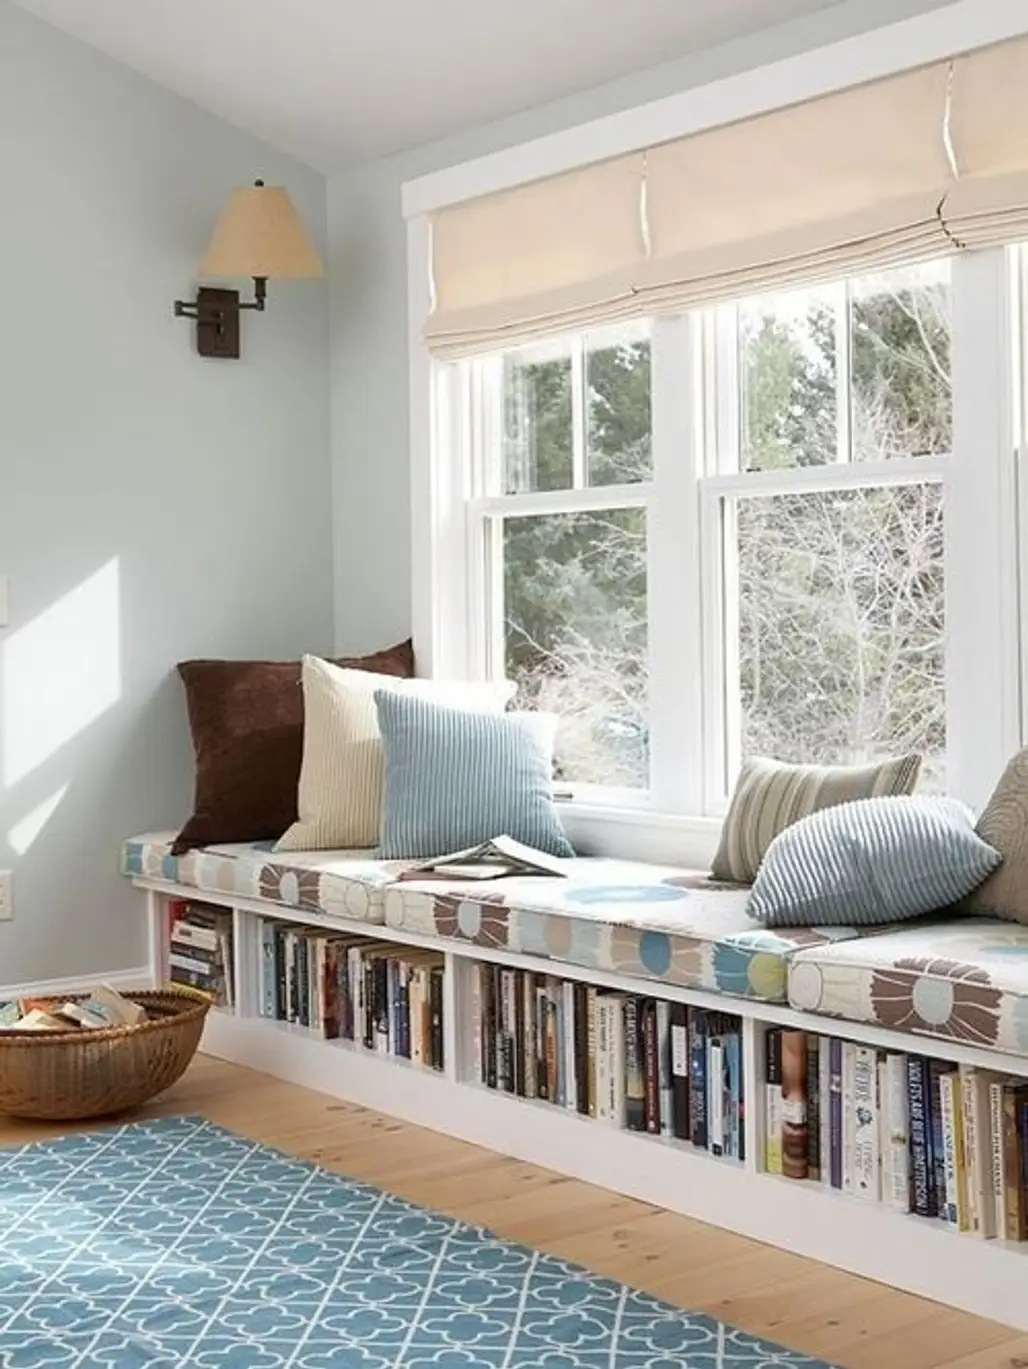 Build Book Storage into a Window Seat